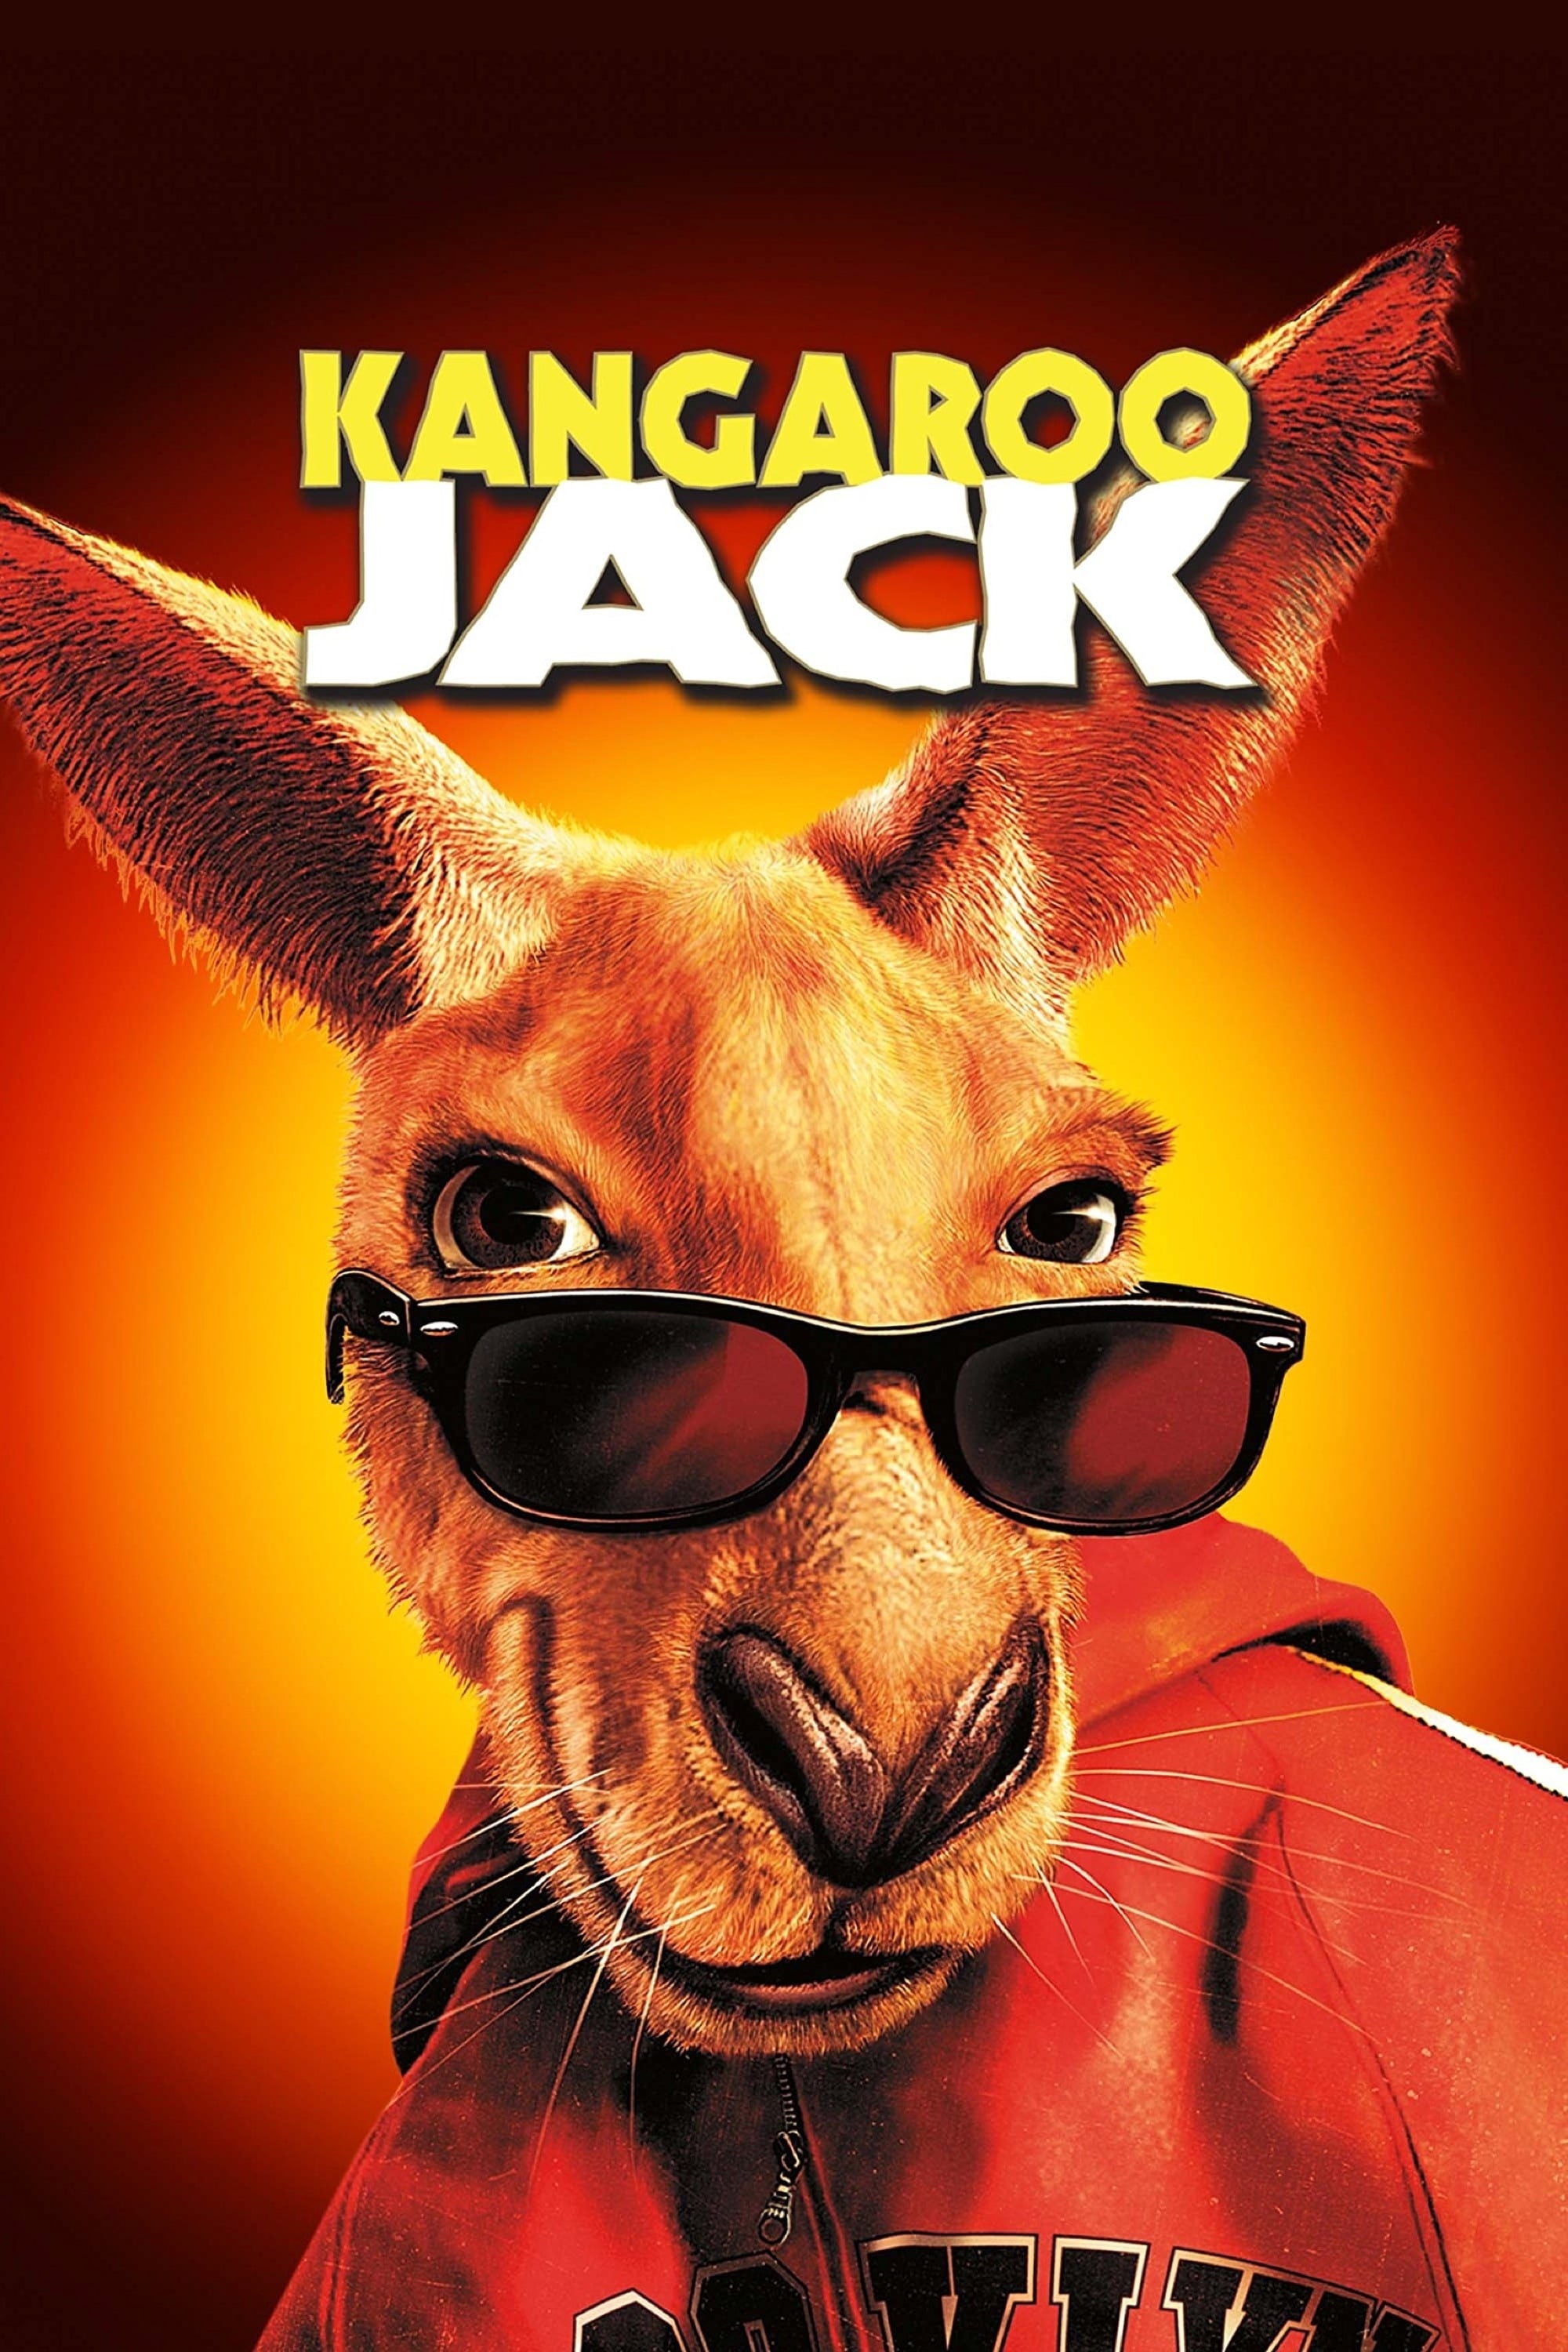 Kangaroo Jack (2003) Main Poster